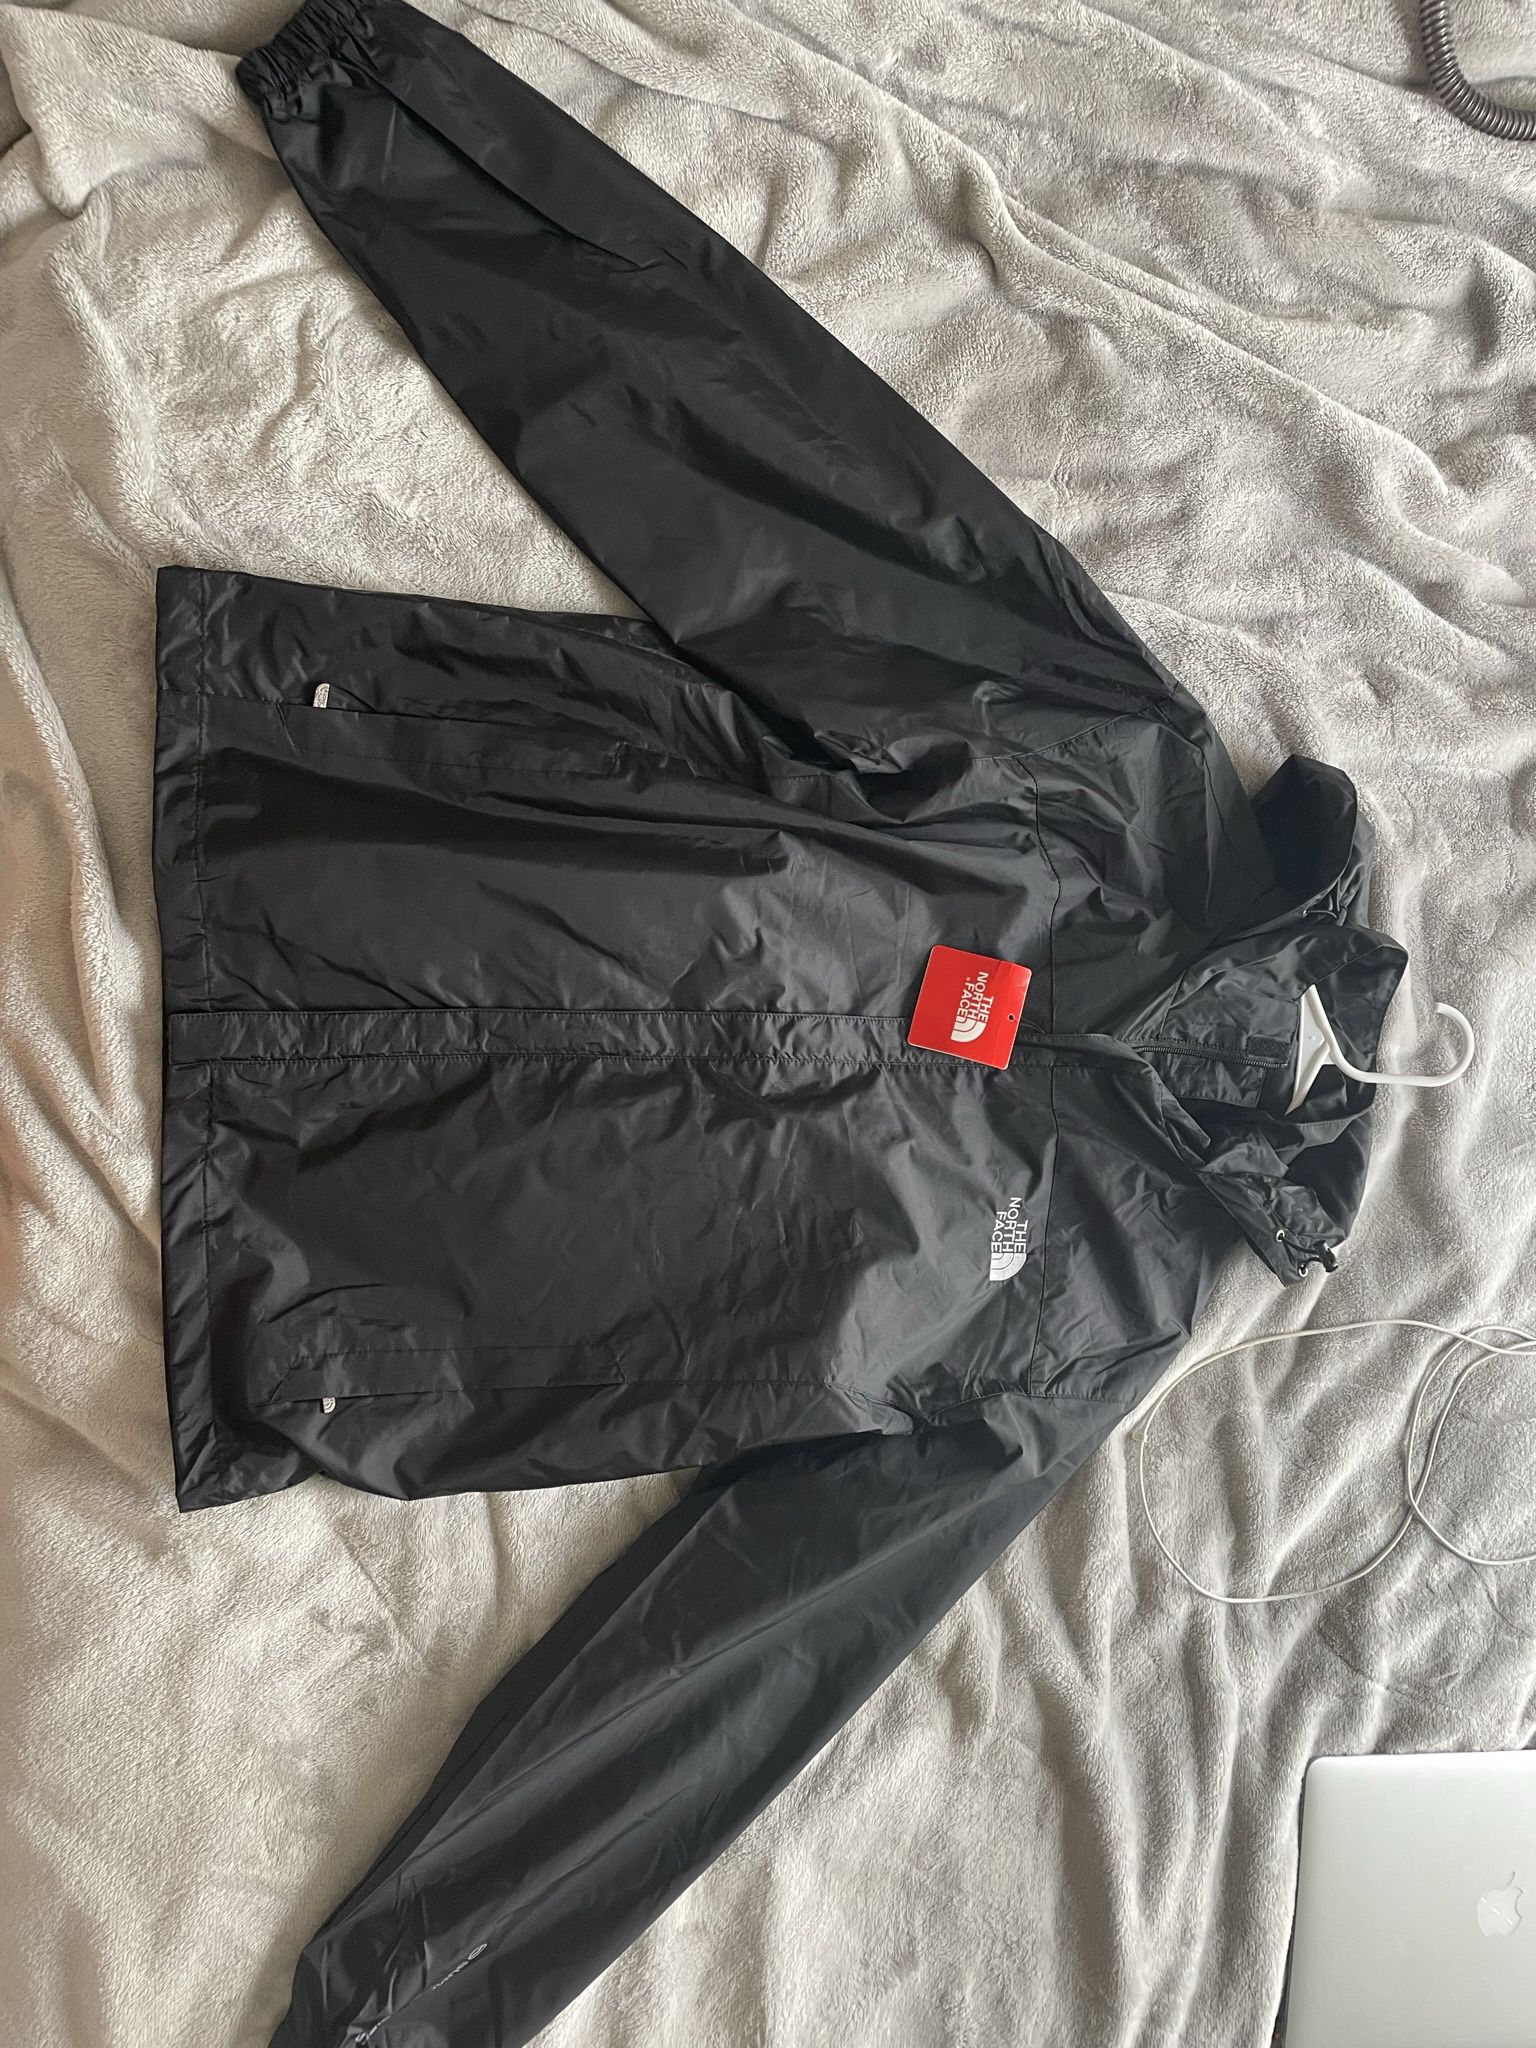 North Face Black Light Rain Jacket Size XL